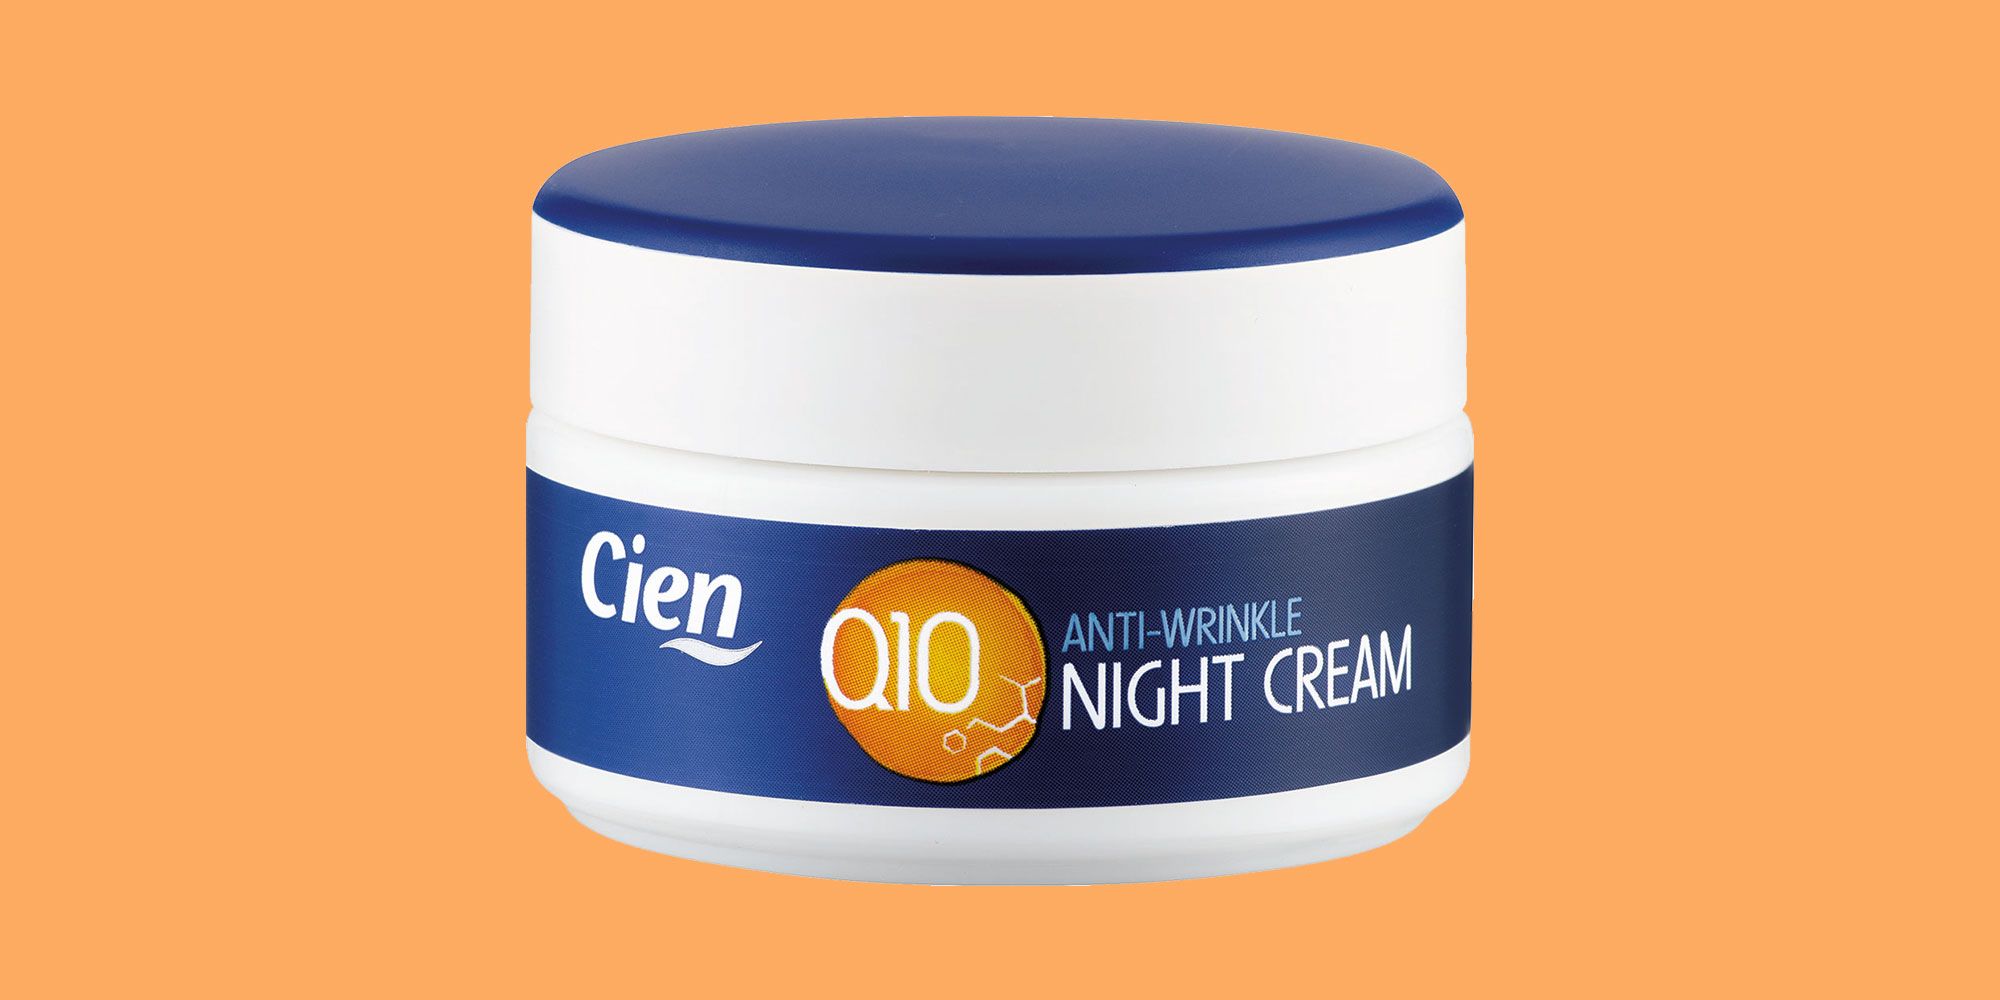 lidl cien q10 anti wrinkle cream reviews)